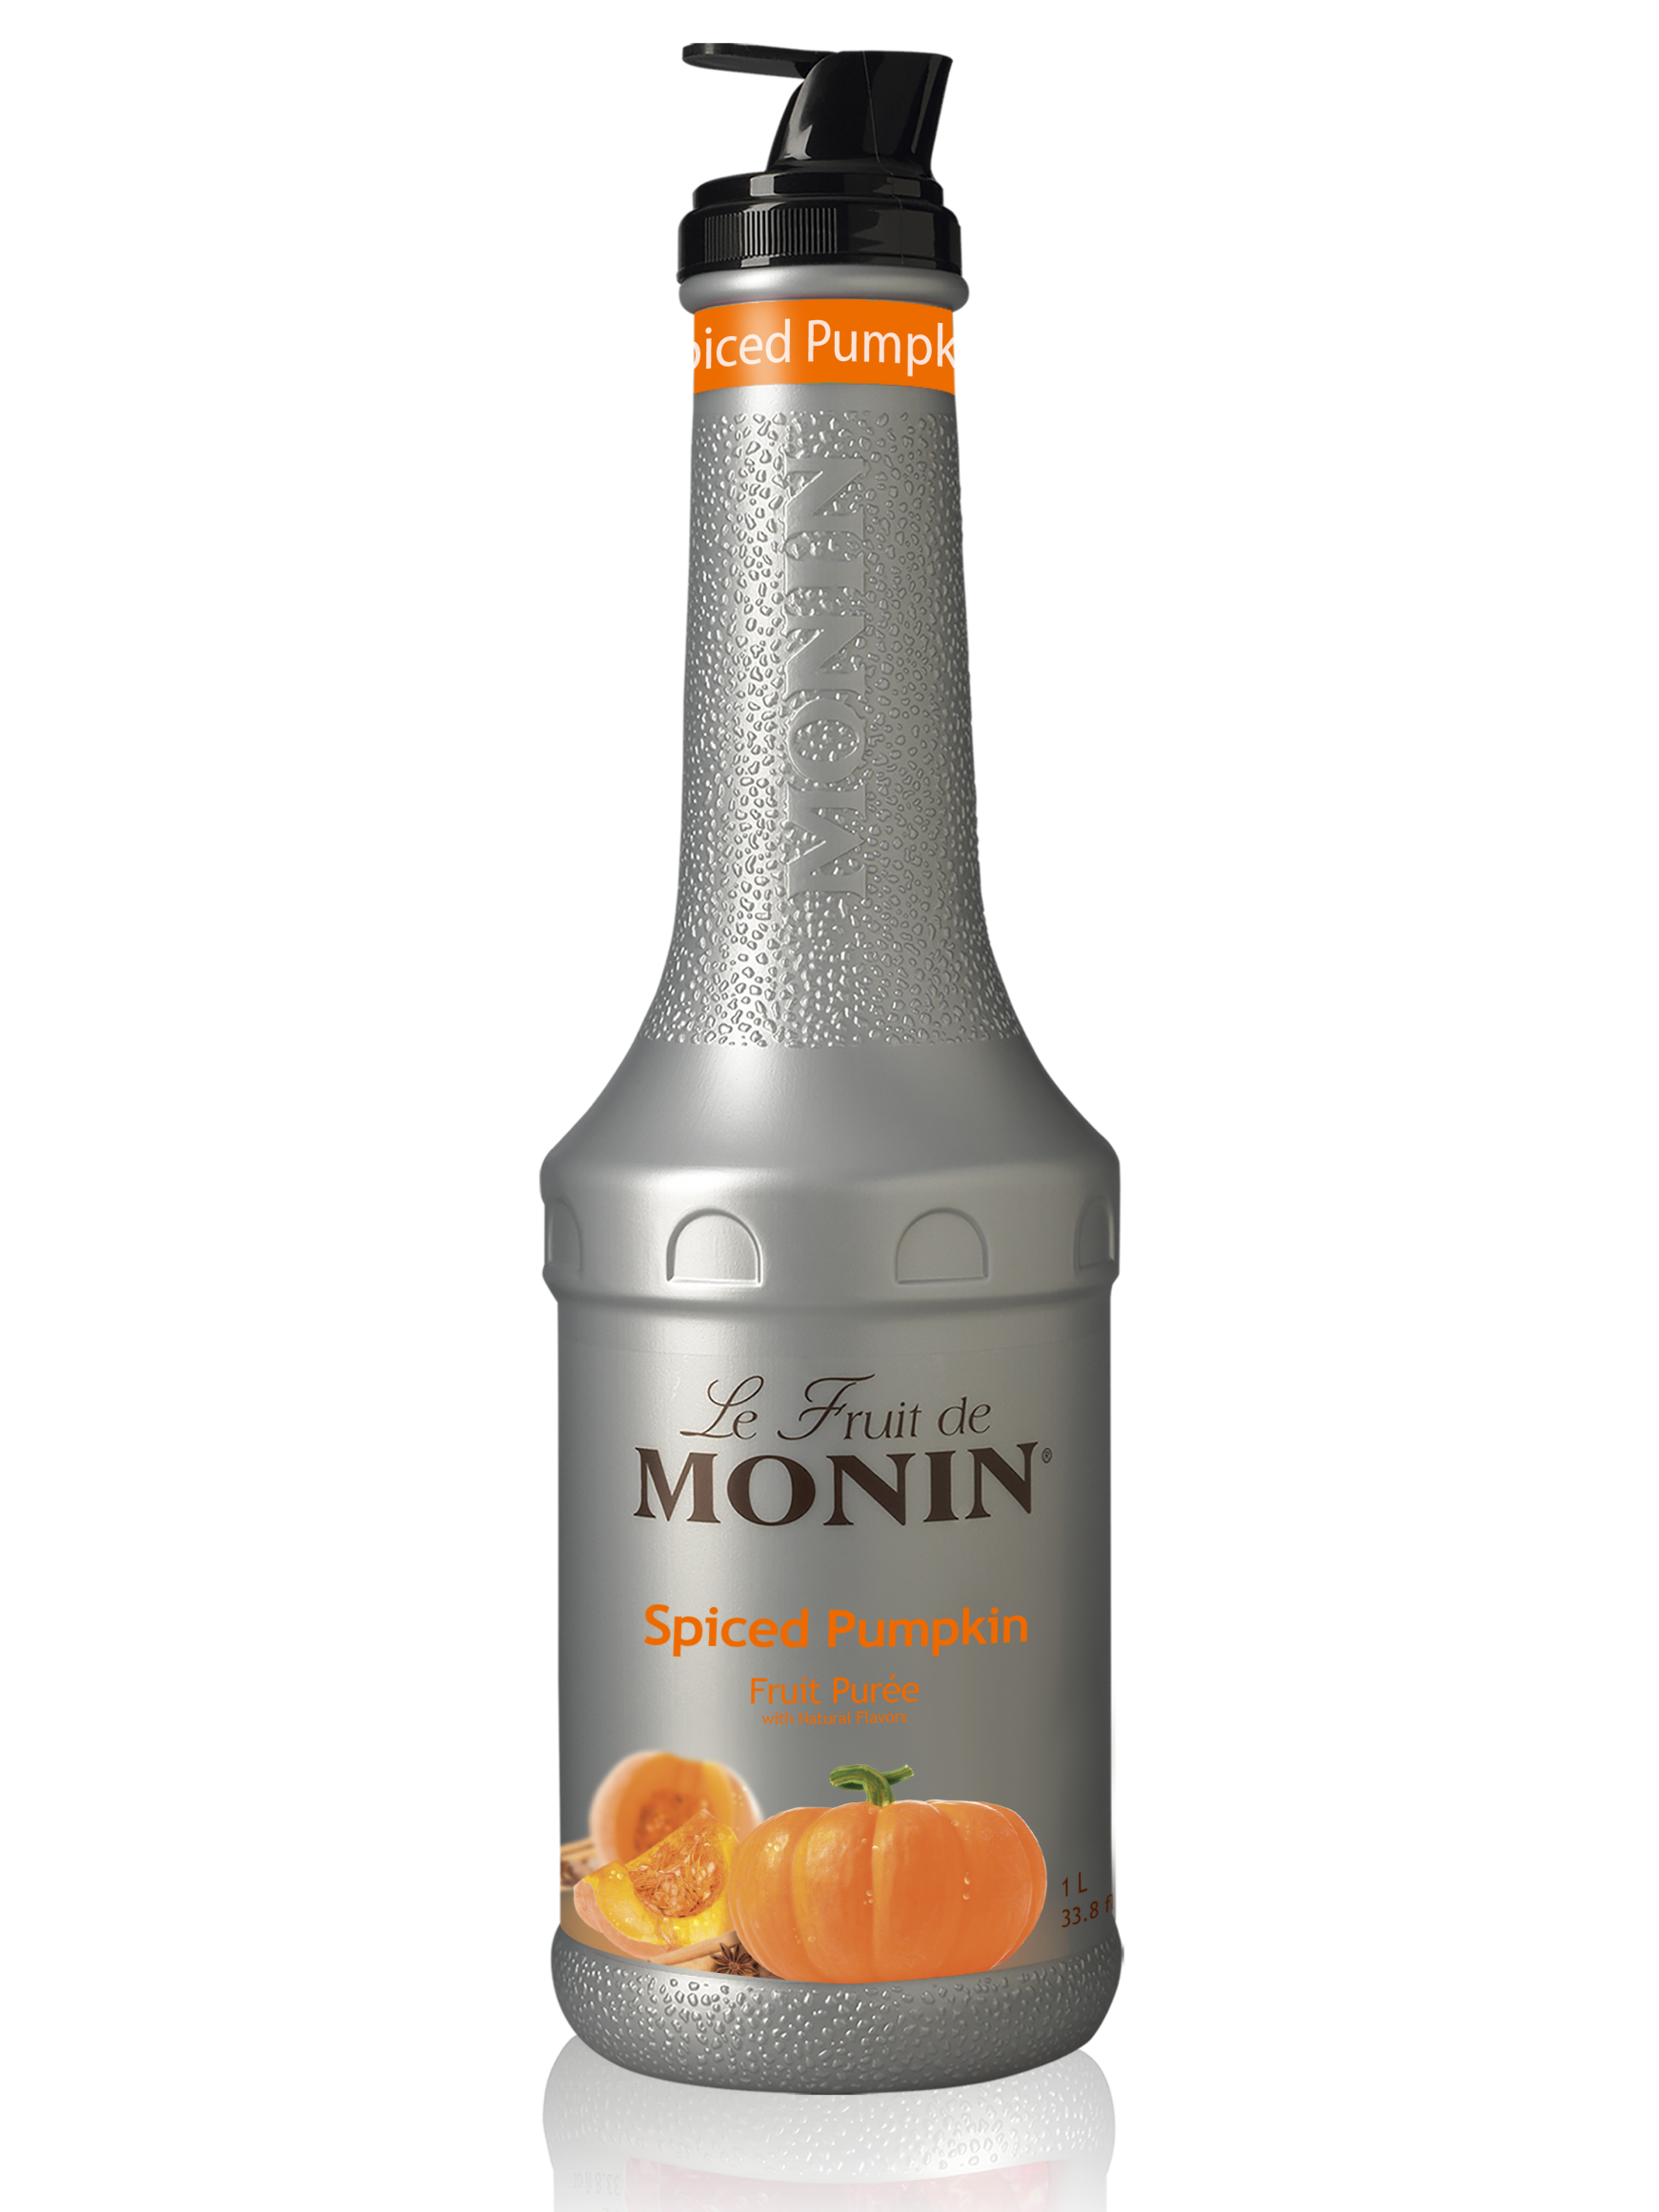 Monin Spiced Pumpkin Fruit Puree (1L)